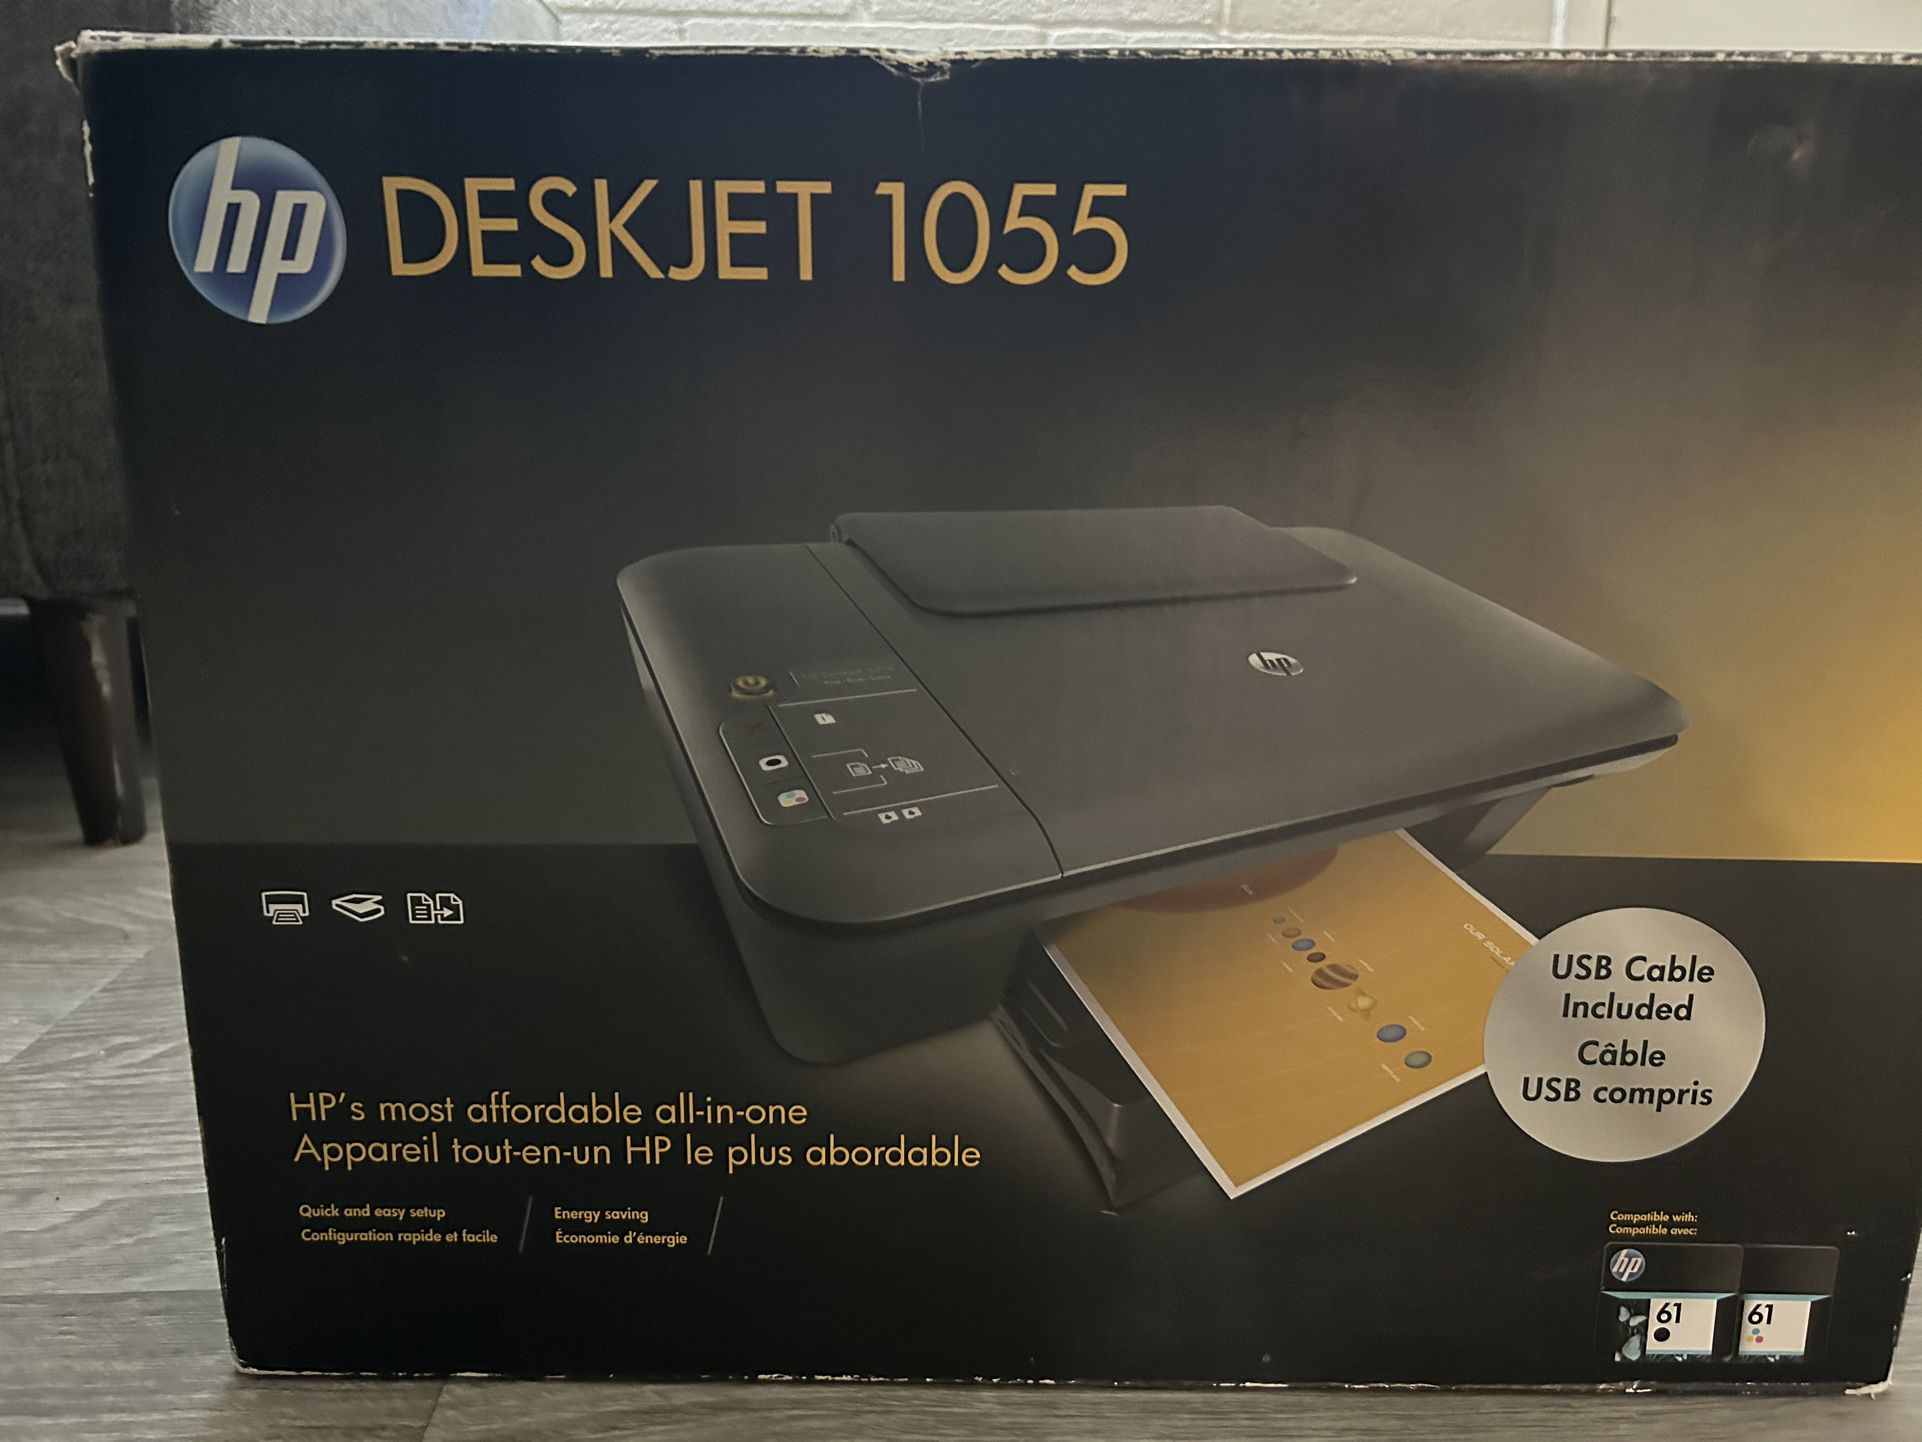 HP Desk Jest 1055 Printer